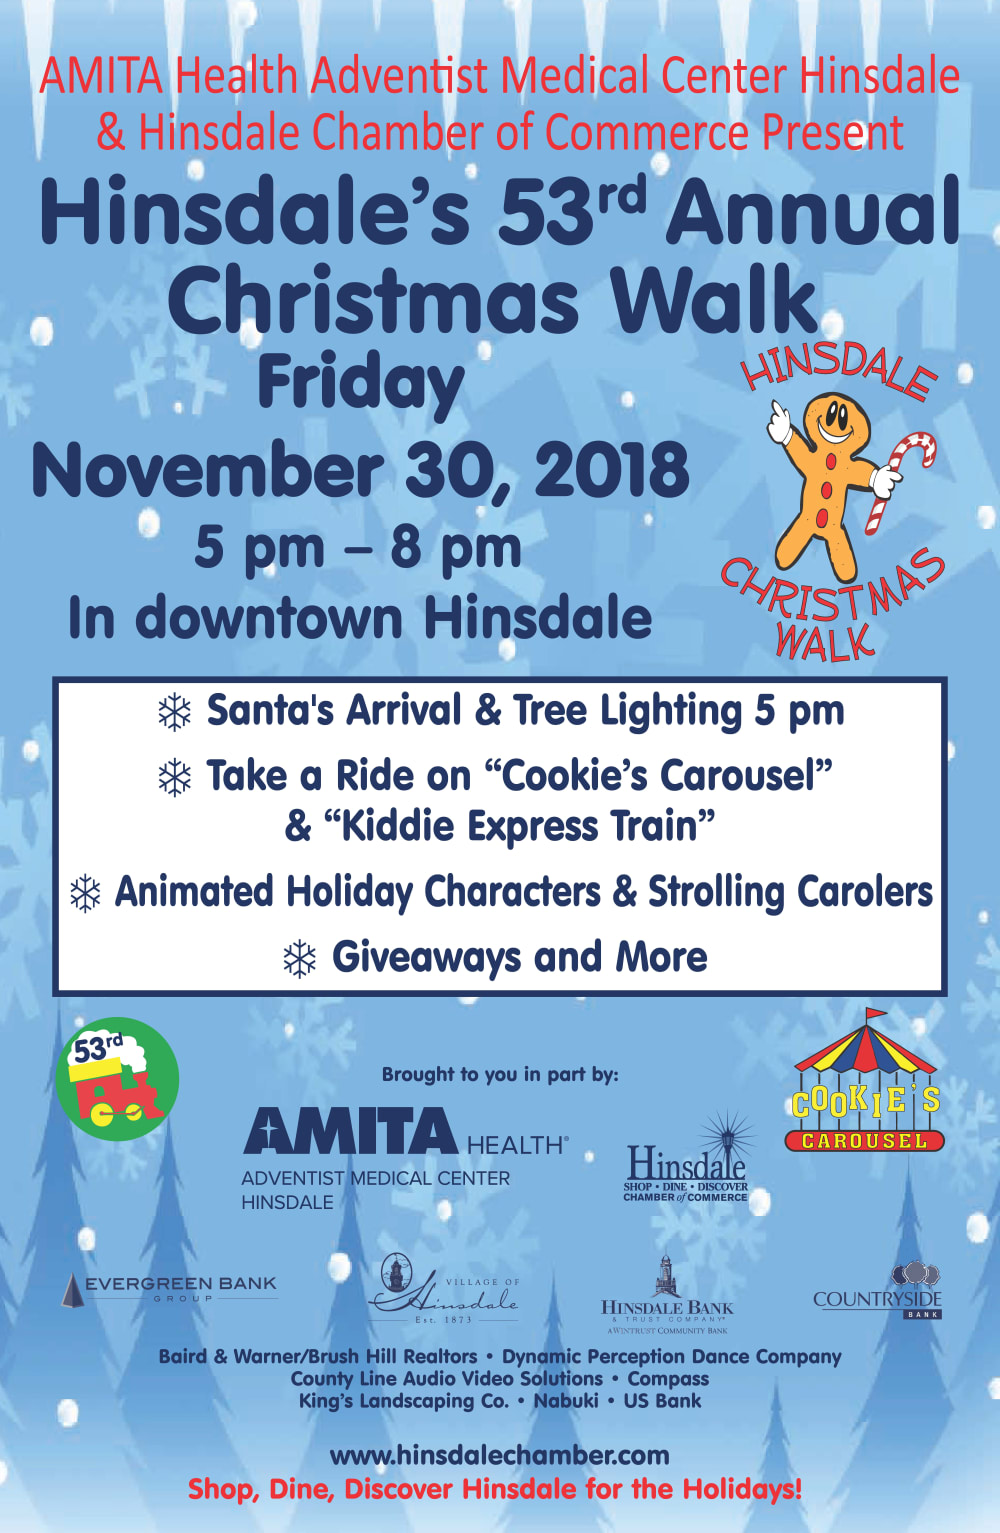 2018 Hinsdale Christmas Walk November 30, 2018 Hinsdale, Illinois